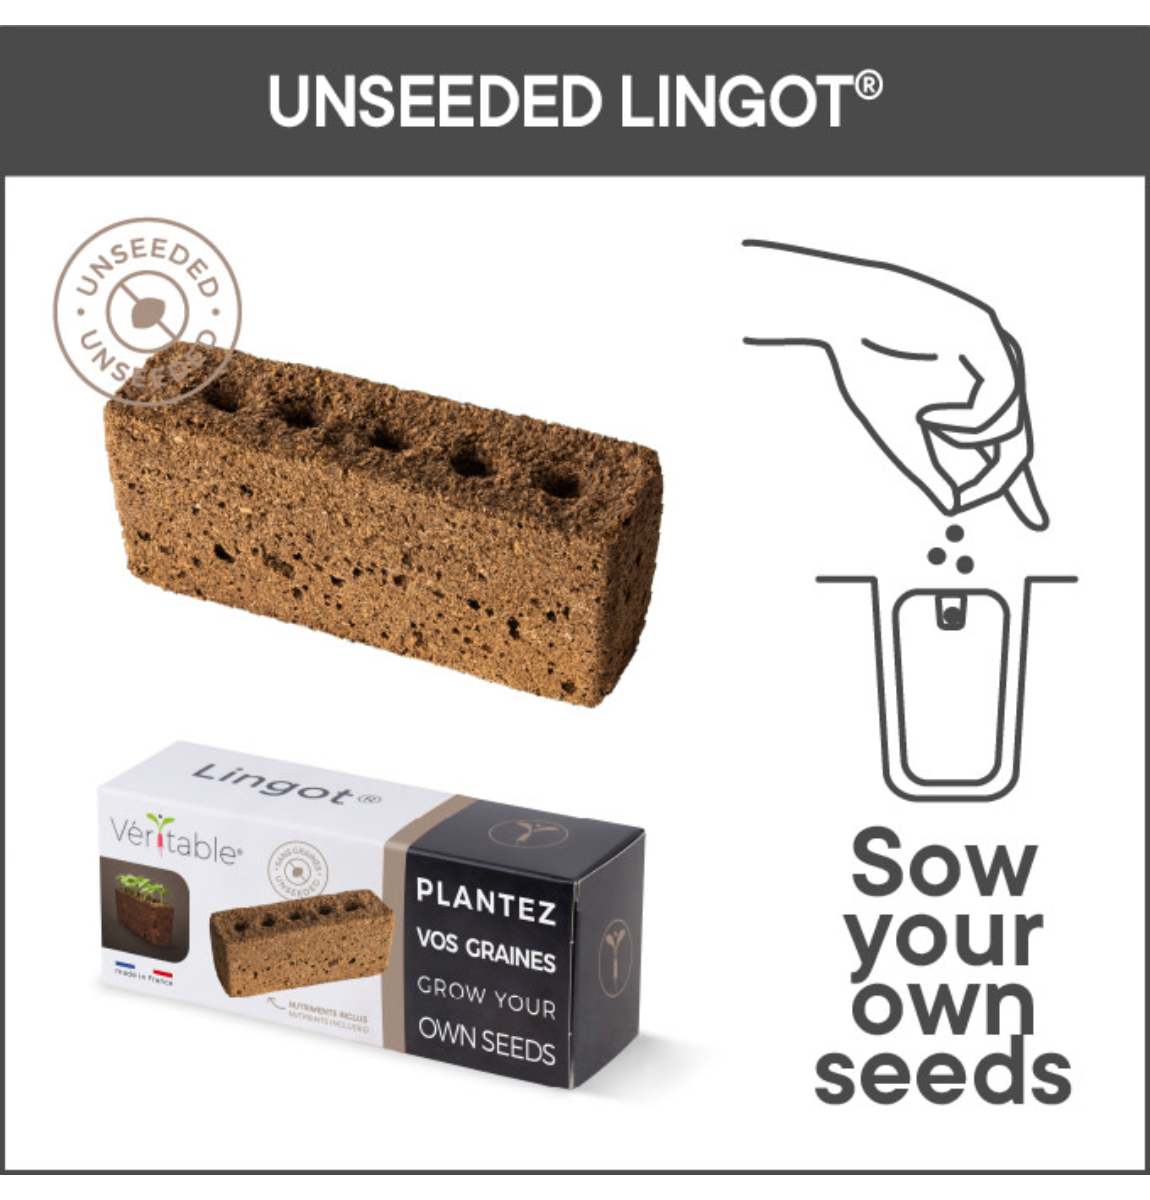 Package of yellow mini-tomatoes Lingot seeds - VERITABLE brand